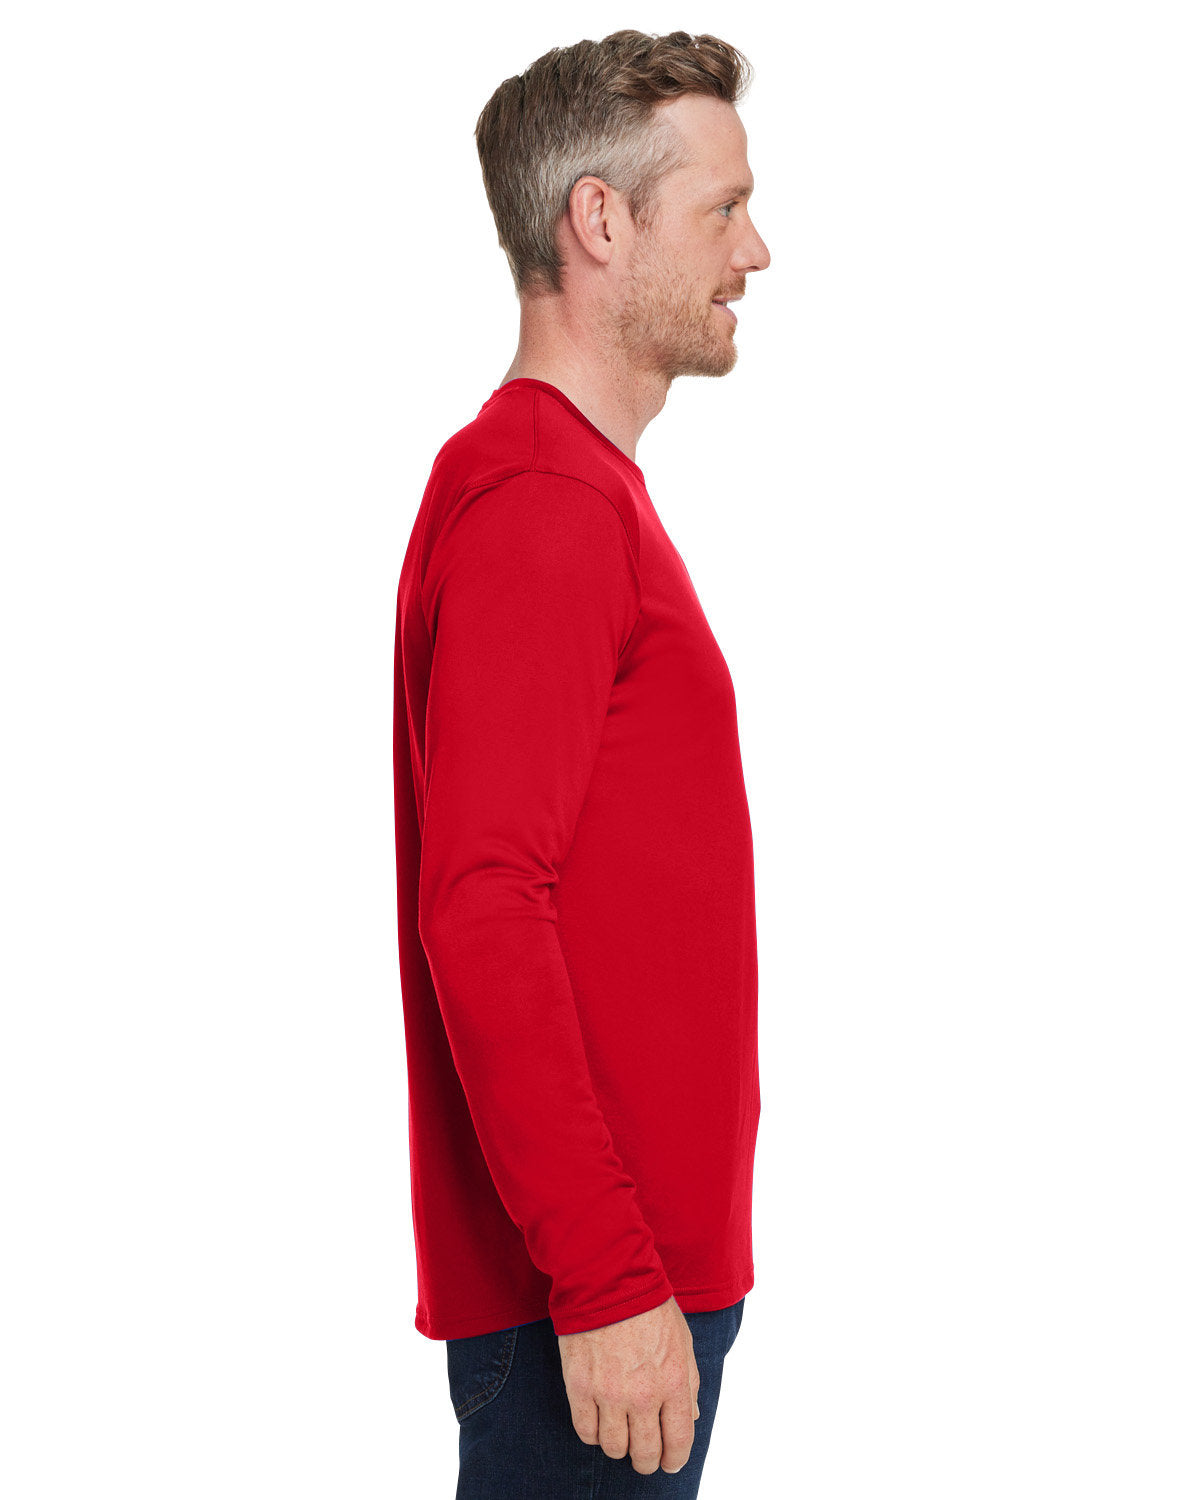 Under Armour Men's Tech Long-Sleeve Custom T-Shirts, Red